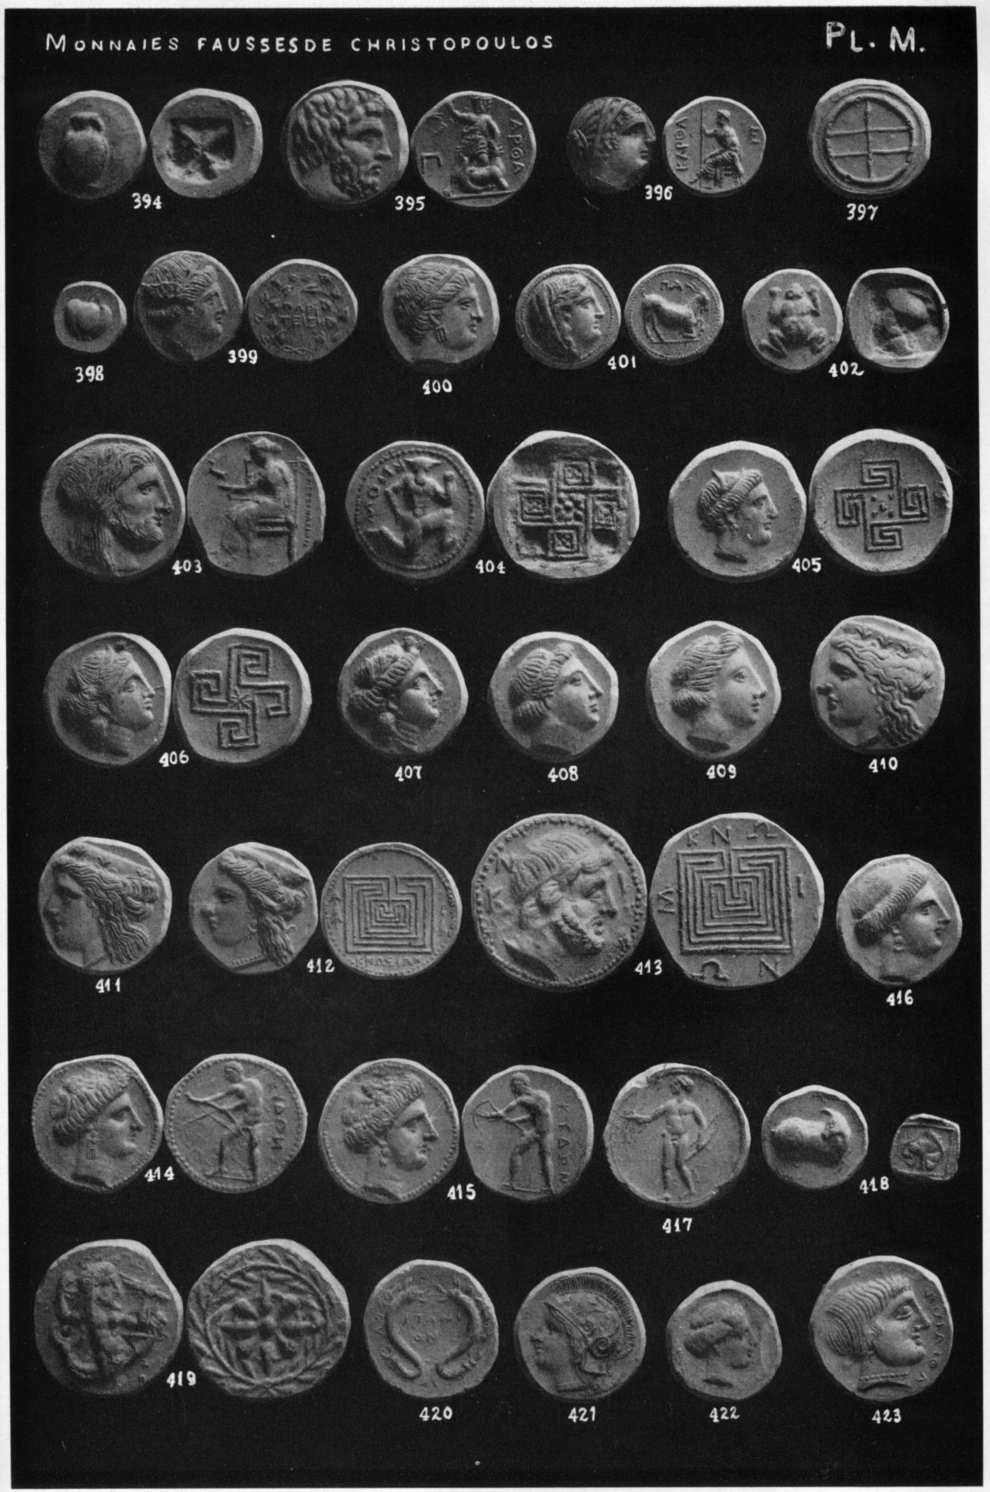 Plate M of false coins